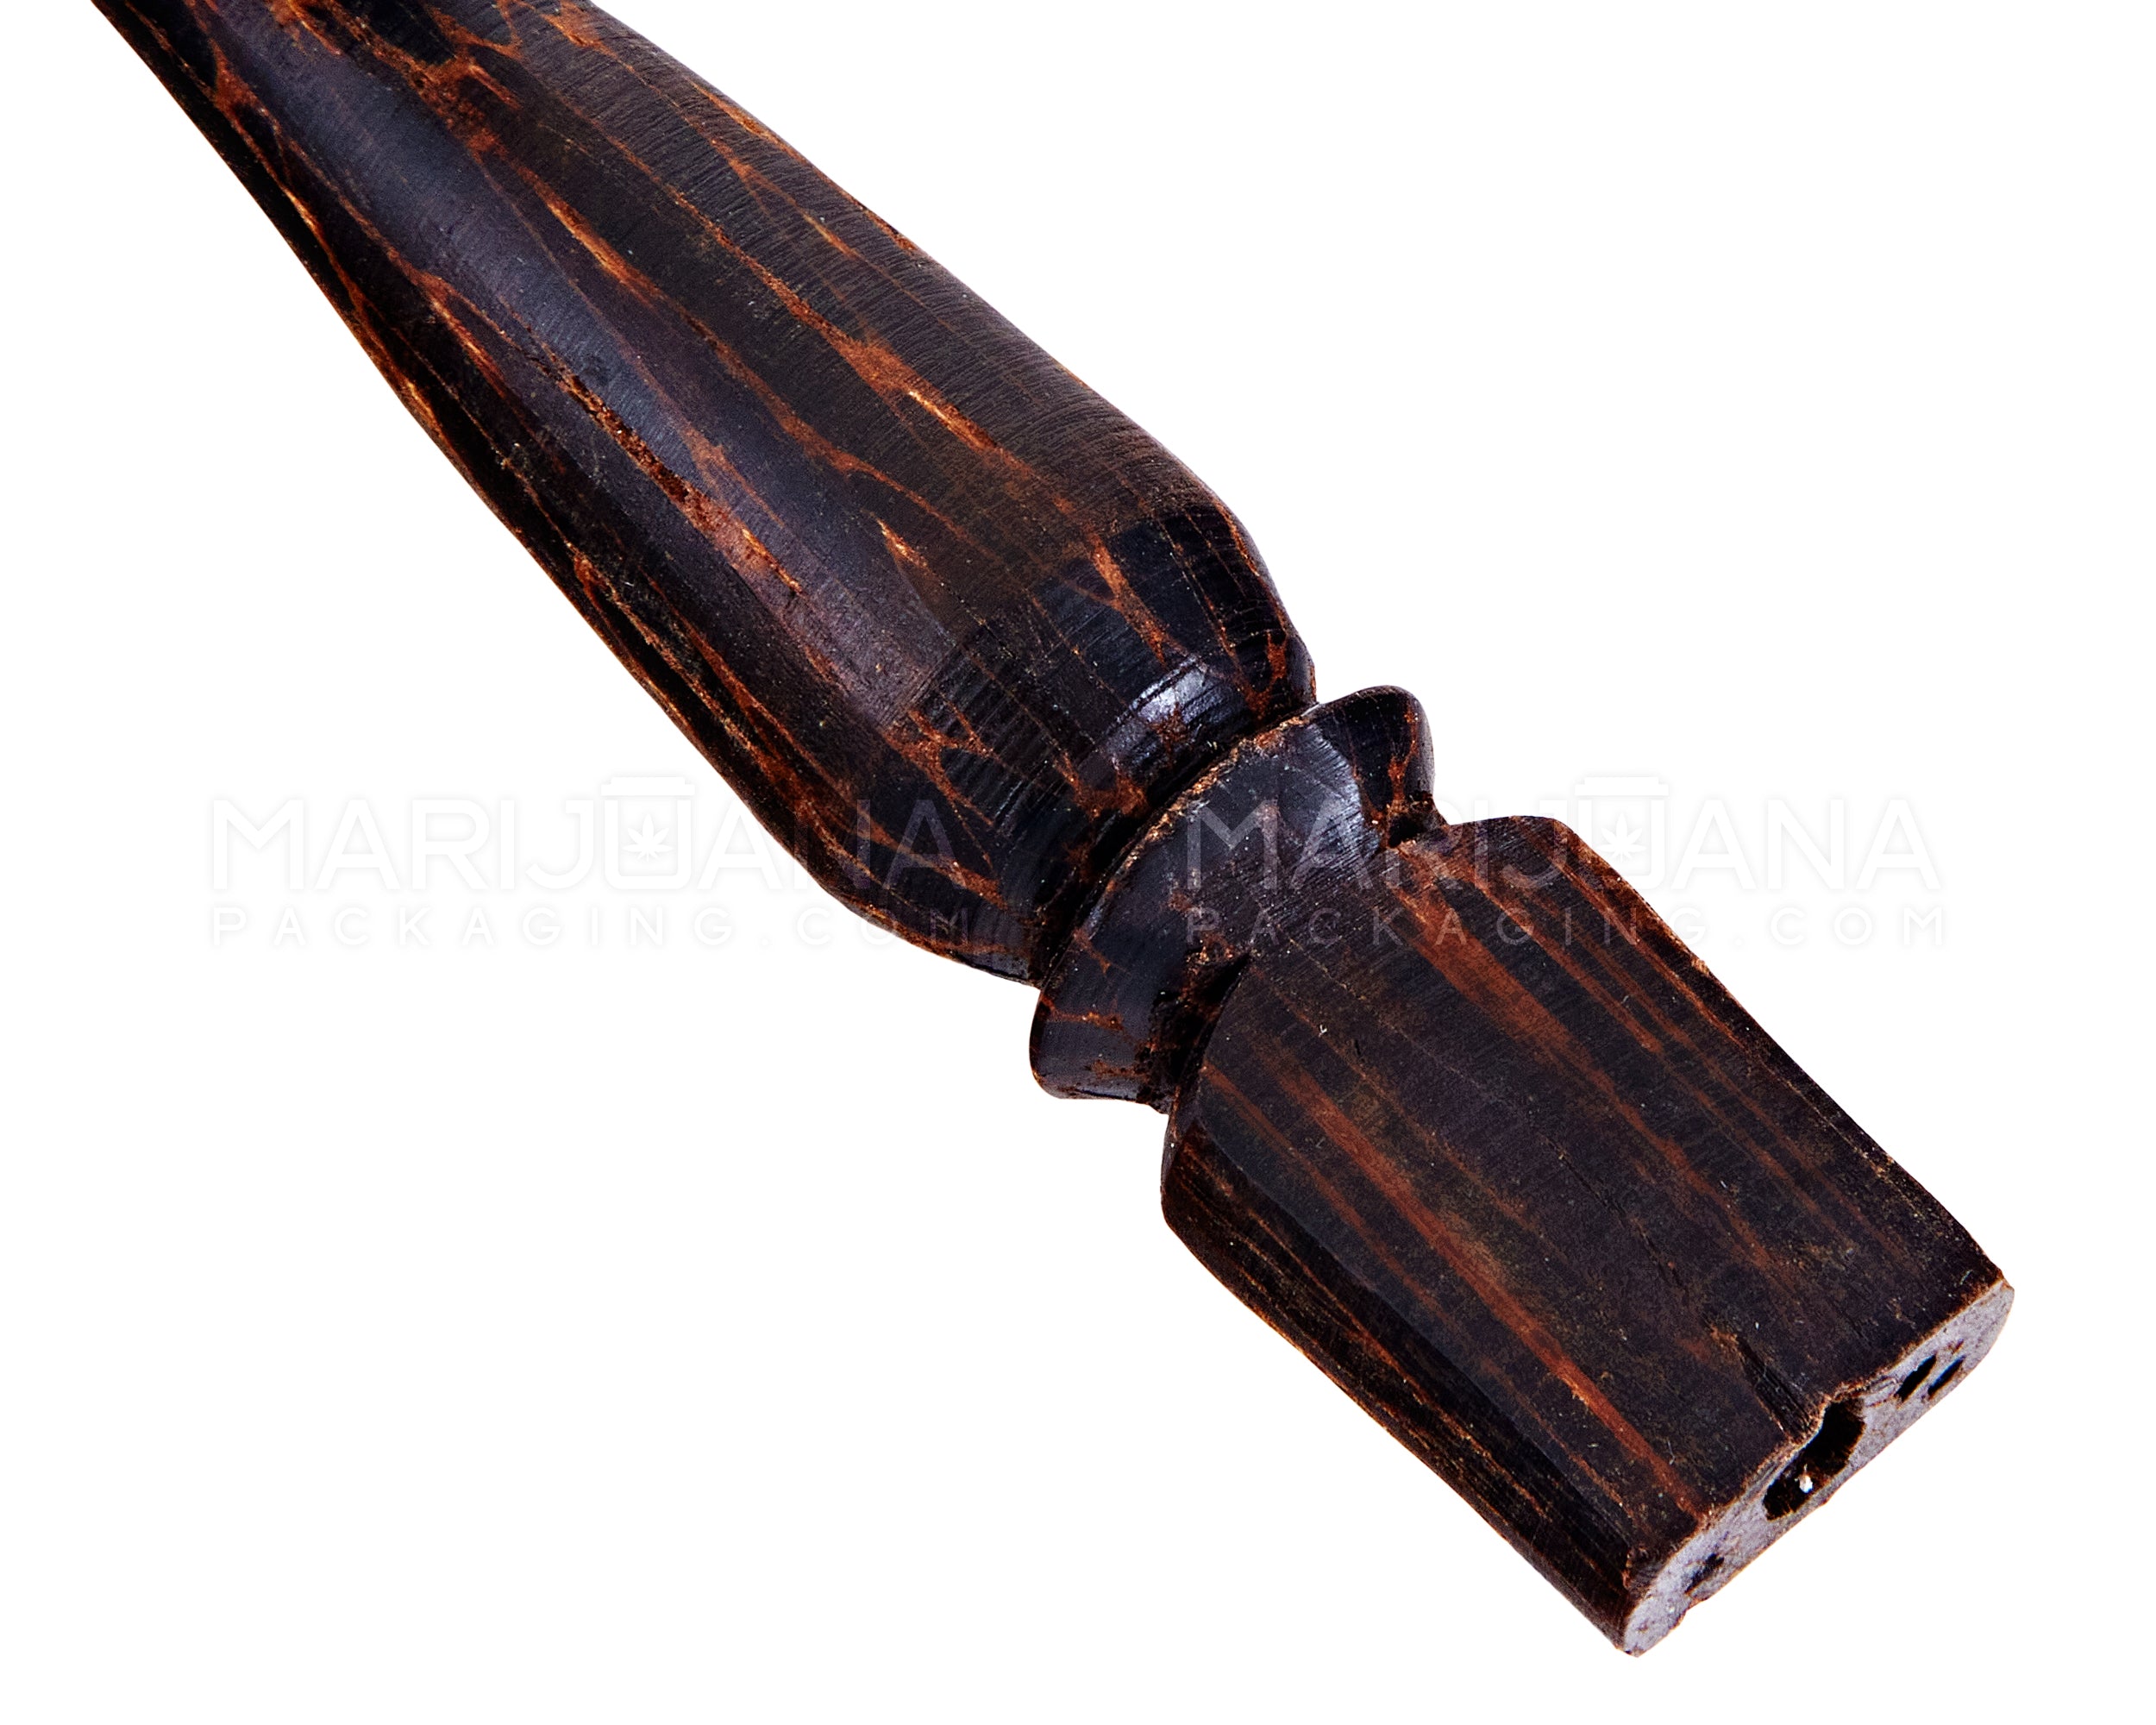 420 Leaf Design Tagua Sherlock Hand Pipe | 3.5in Long - Wood - Brown - 4